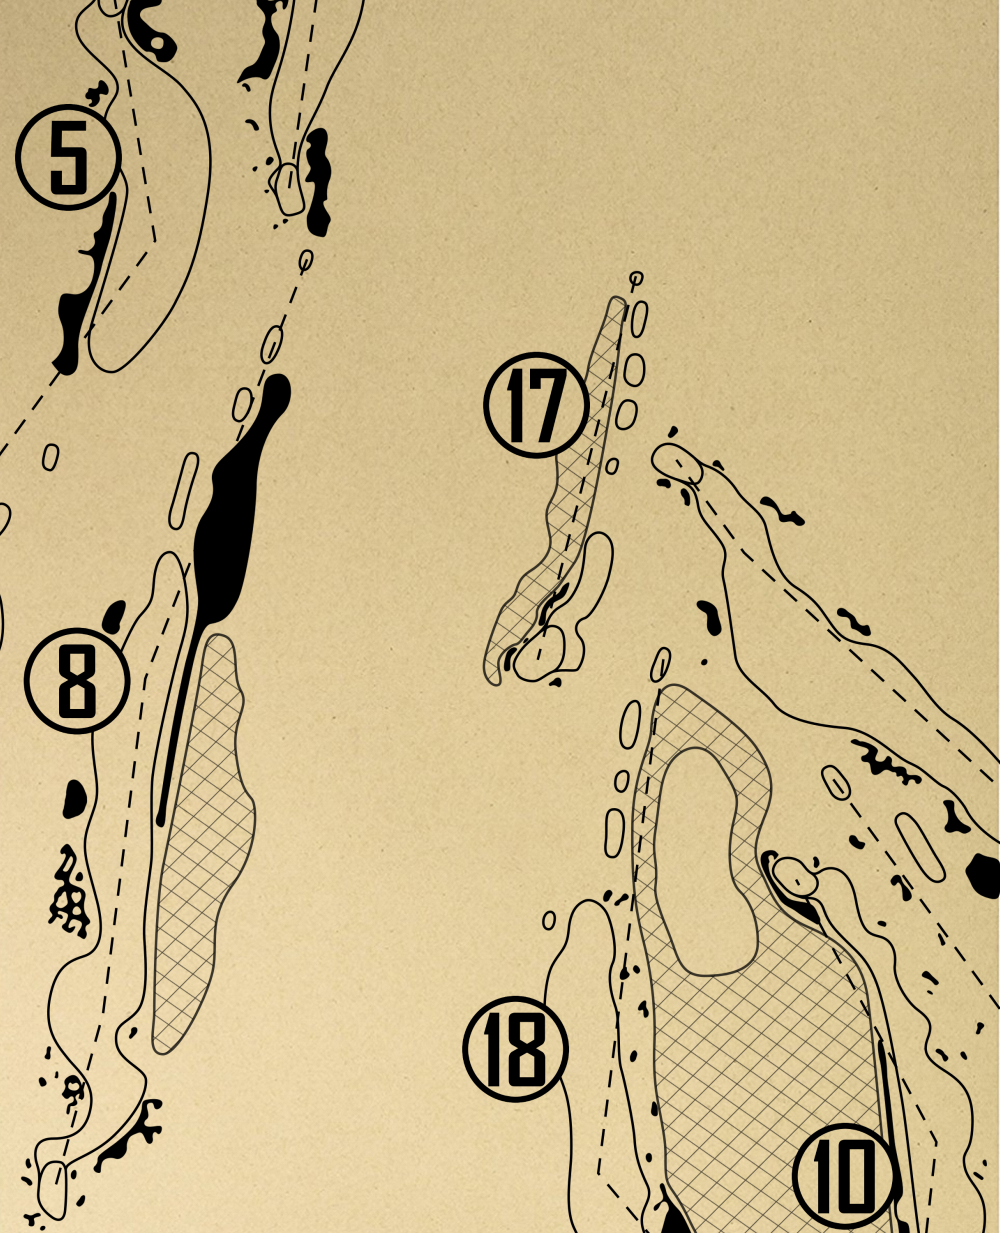 Colleton River Club Dye Course Outline (Print)